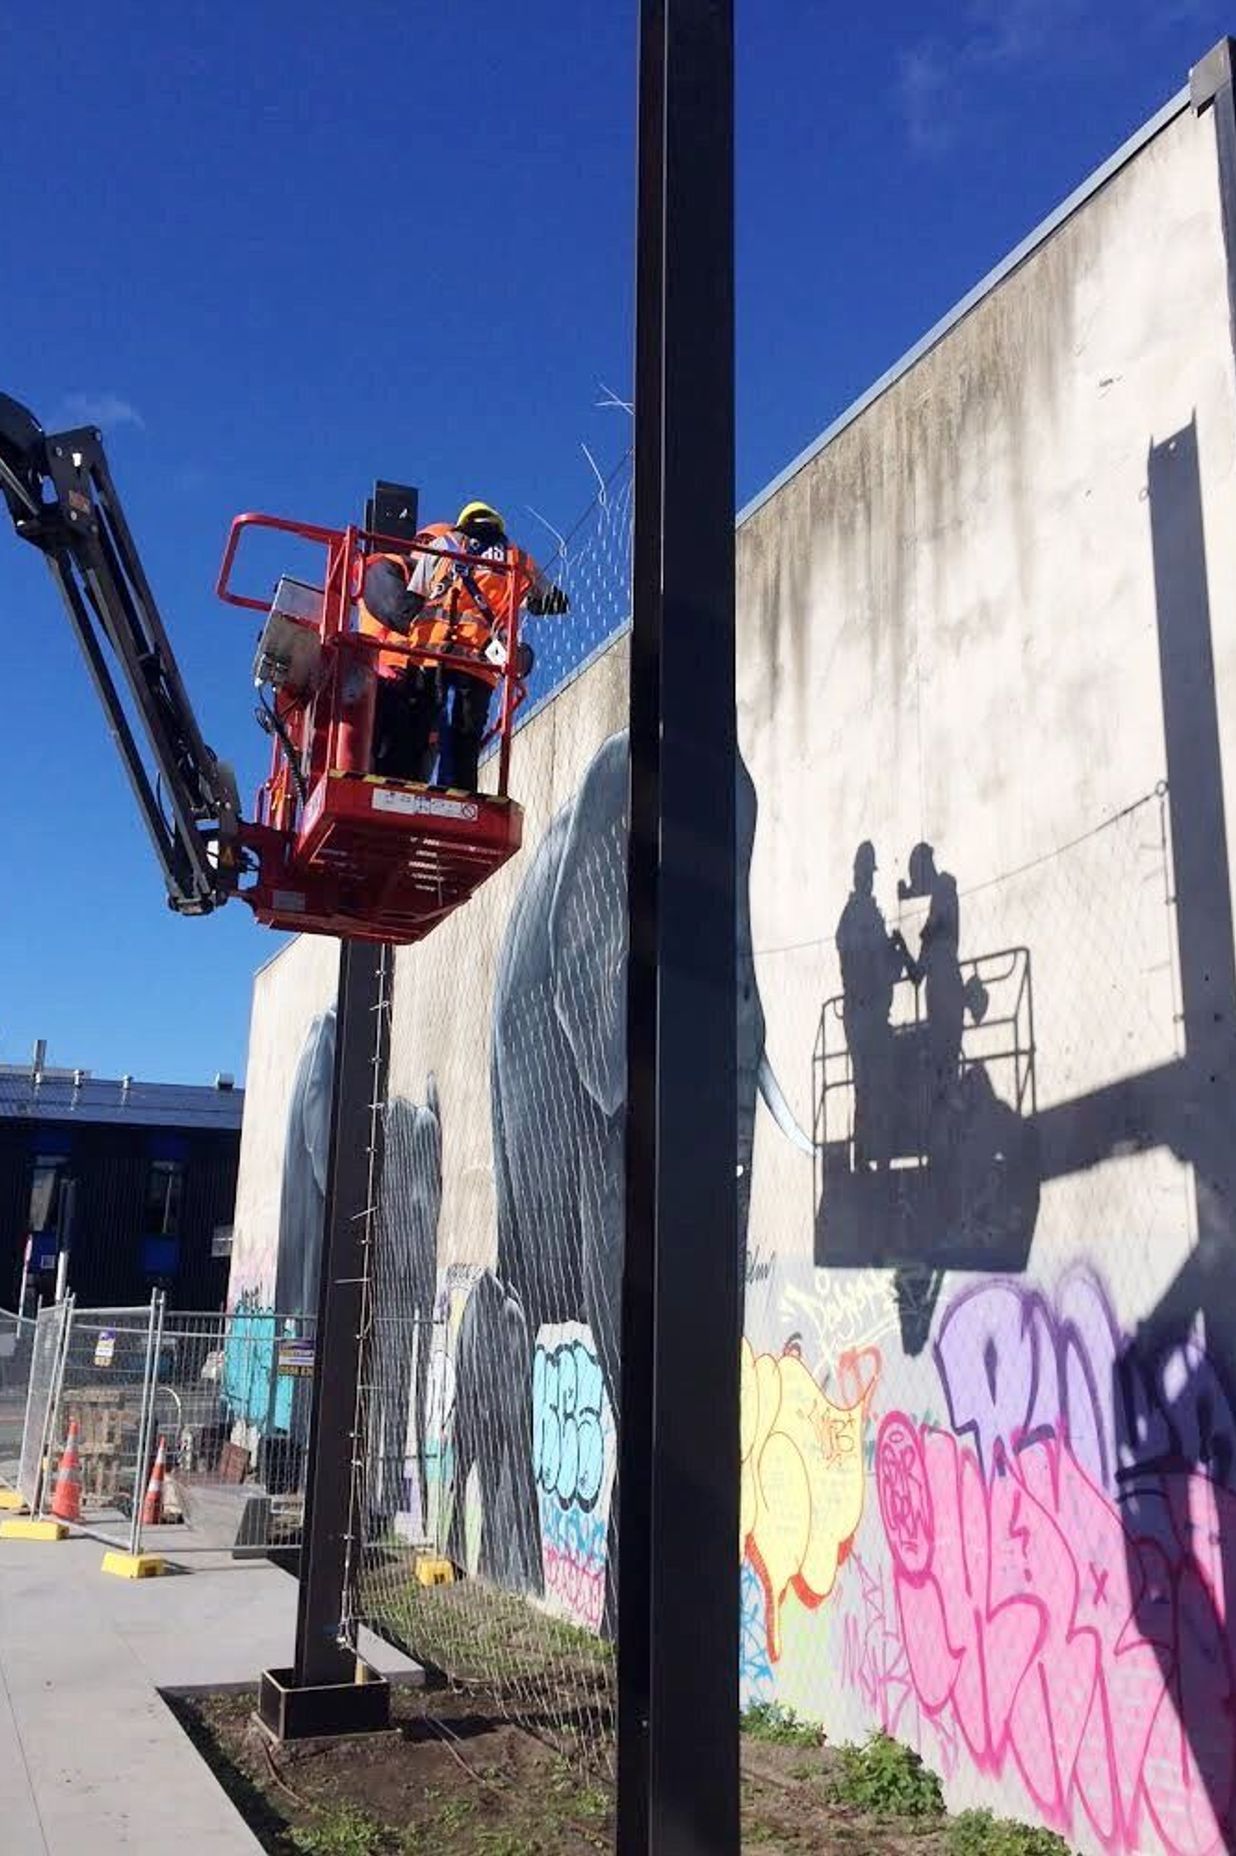 South Frame laneway catenary lighting and mesh-infilled walls - Christchurch CBD
